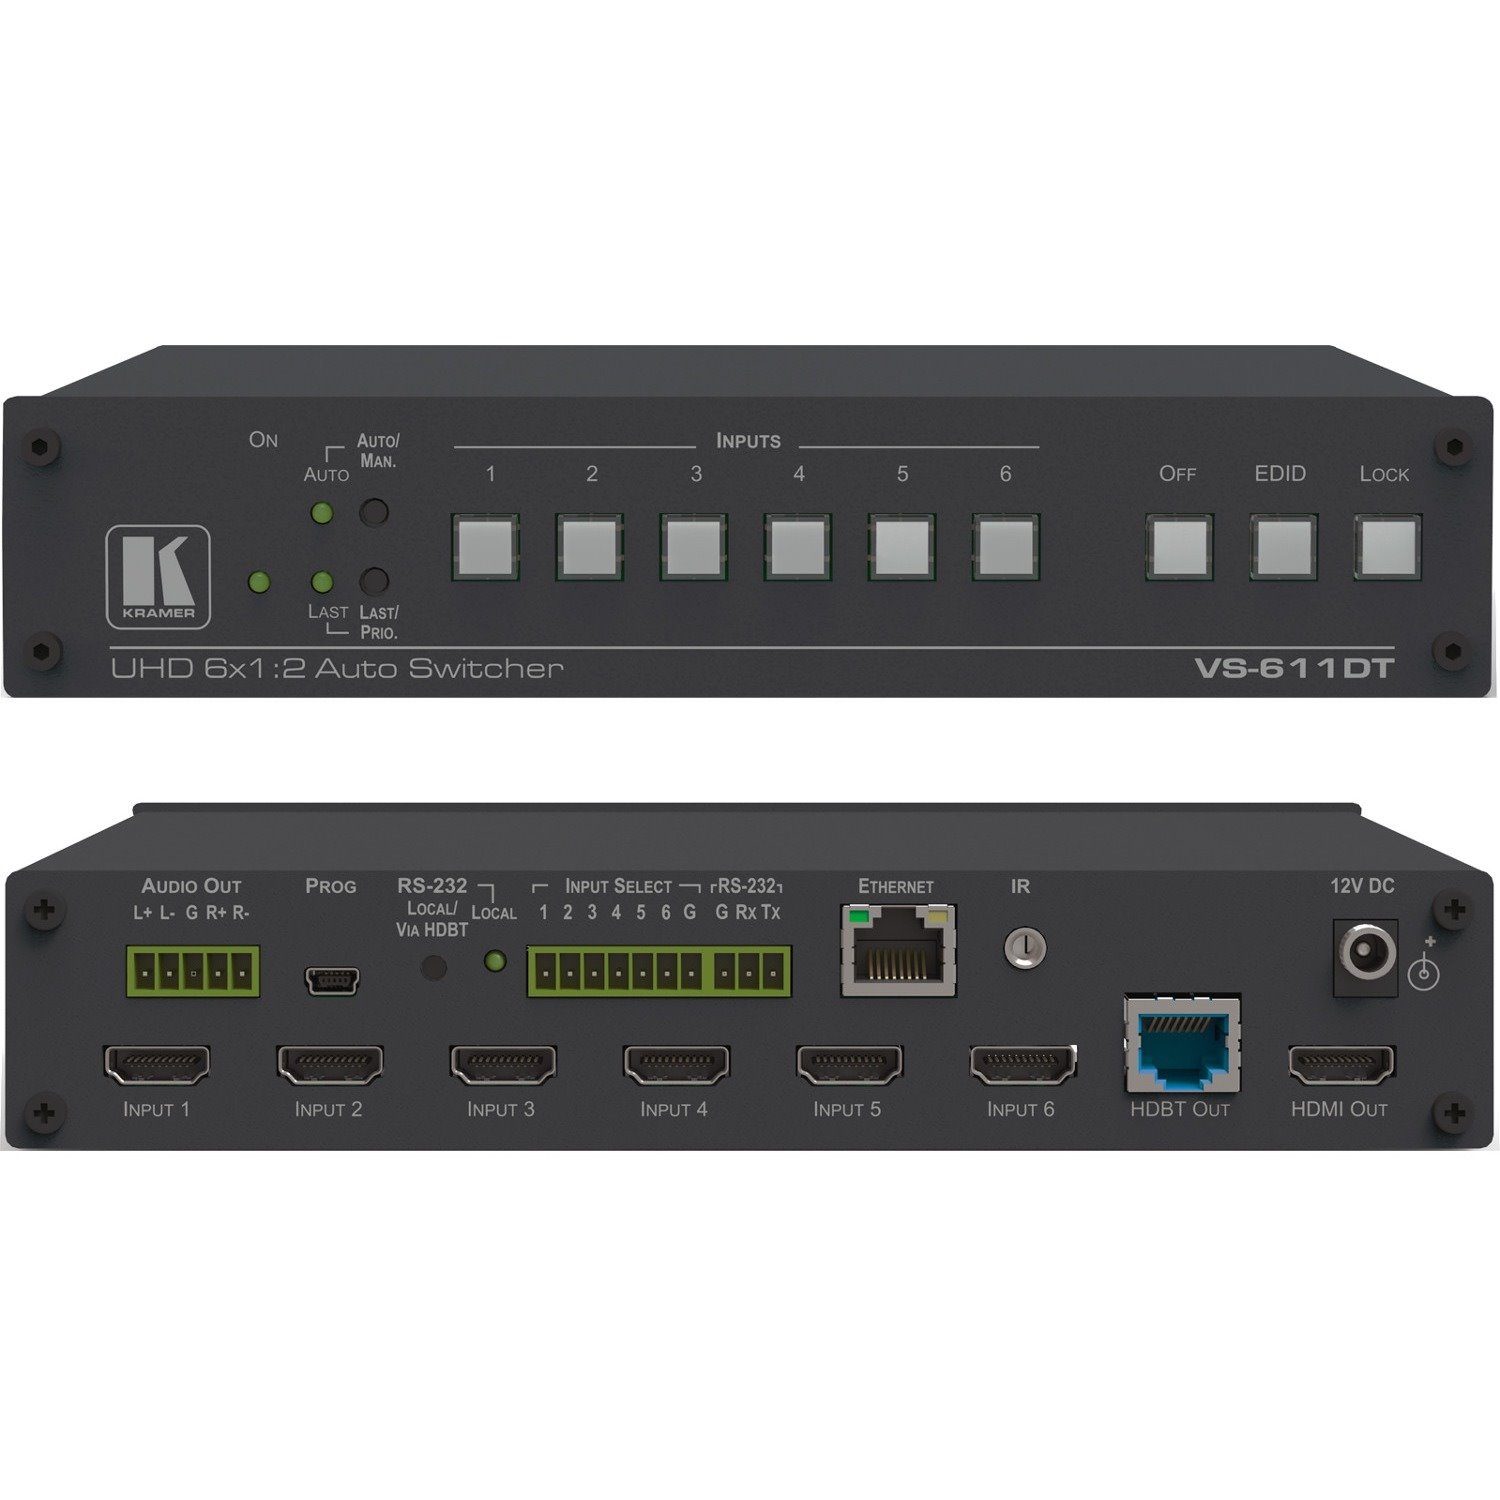 Kramer VS-611DT 6x1:2 4K60 4:2:0 HDMI Auto Switcher and PoE Provider over HDBaseT